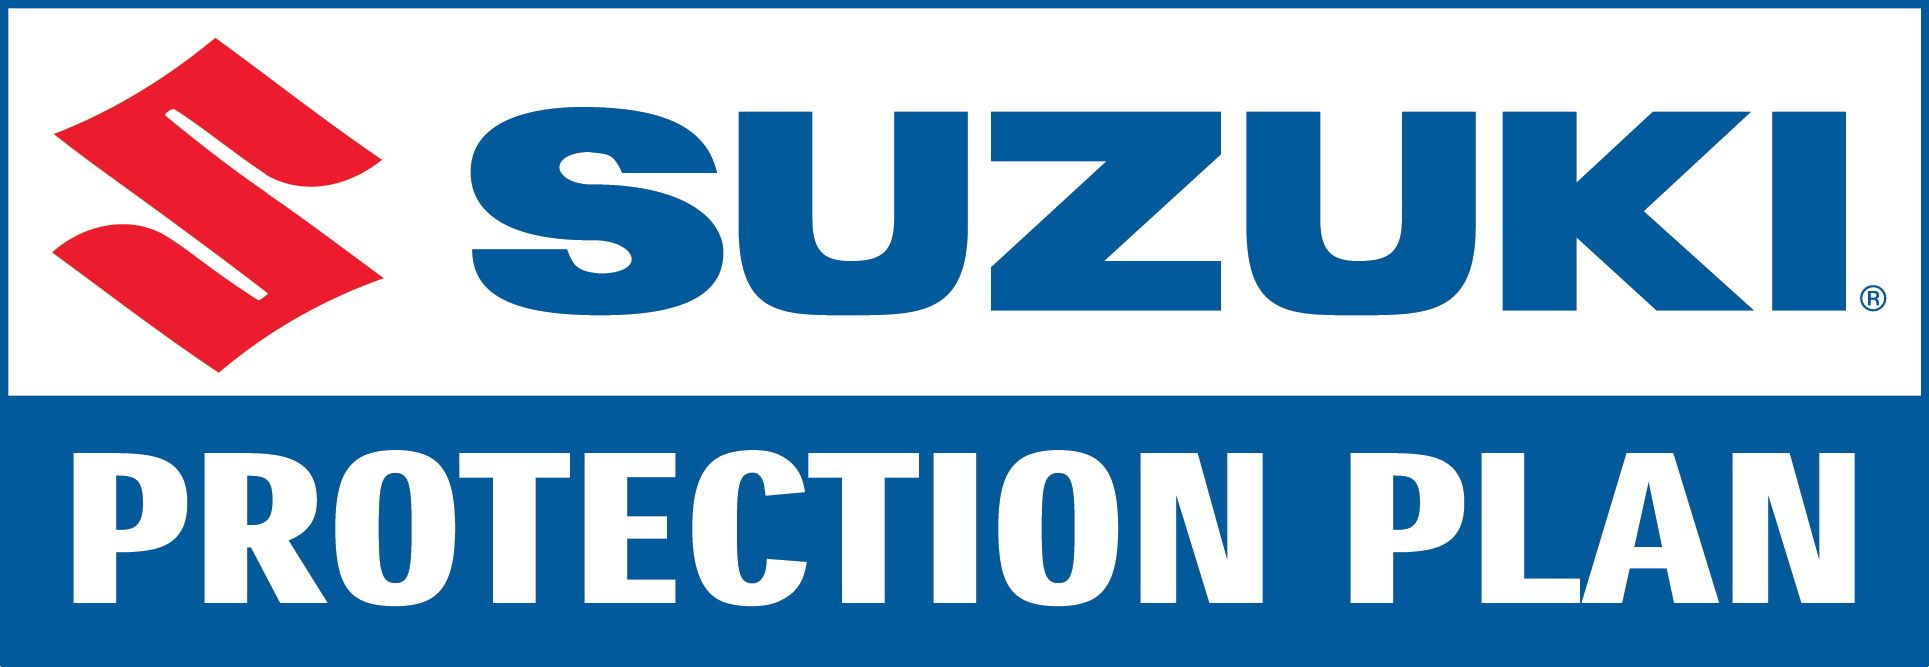 Suzuki Protection Plan